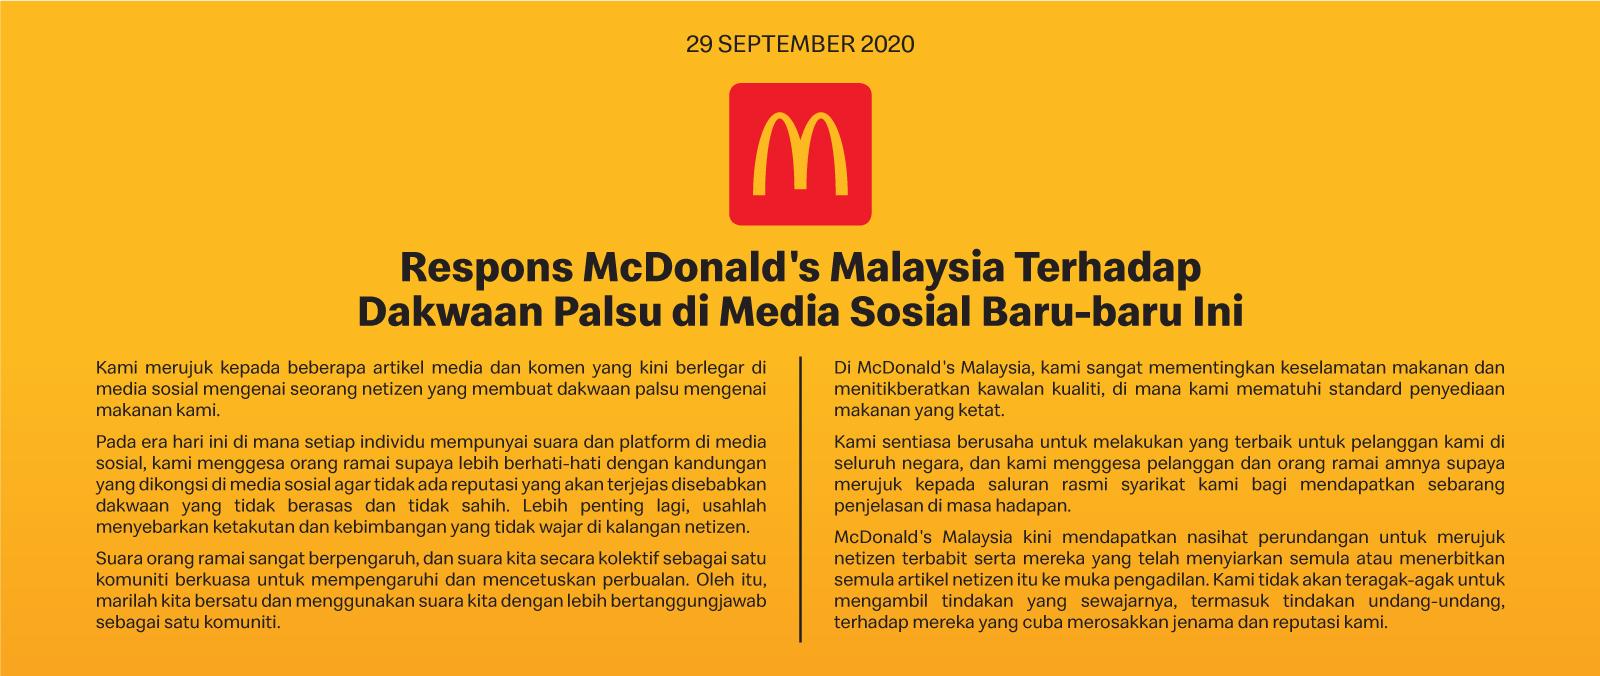 Respons McDonald's Malaysia Terhadap Dakwaan Palsu di Media Sosial Baru-baru Ini's image'